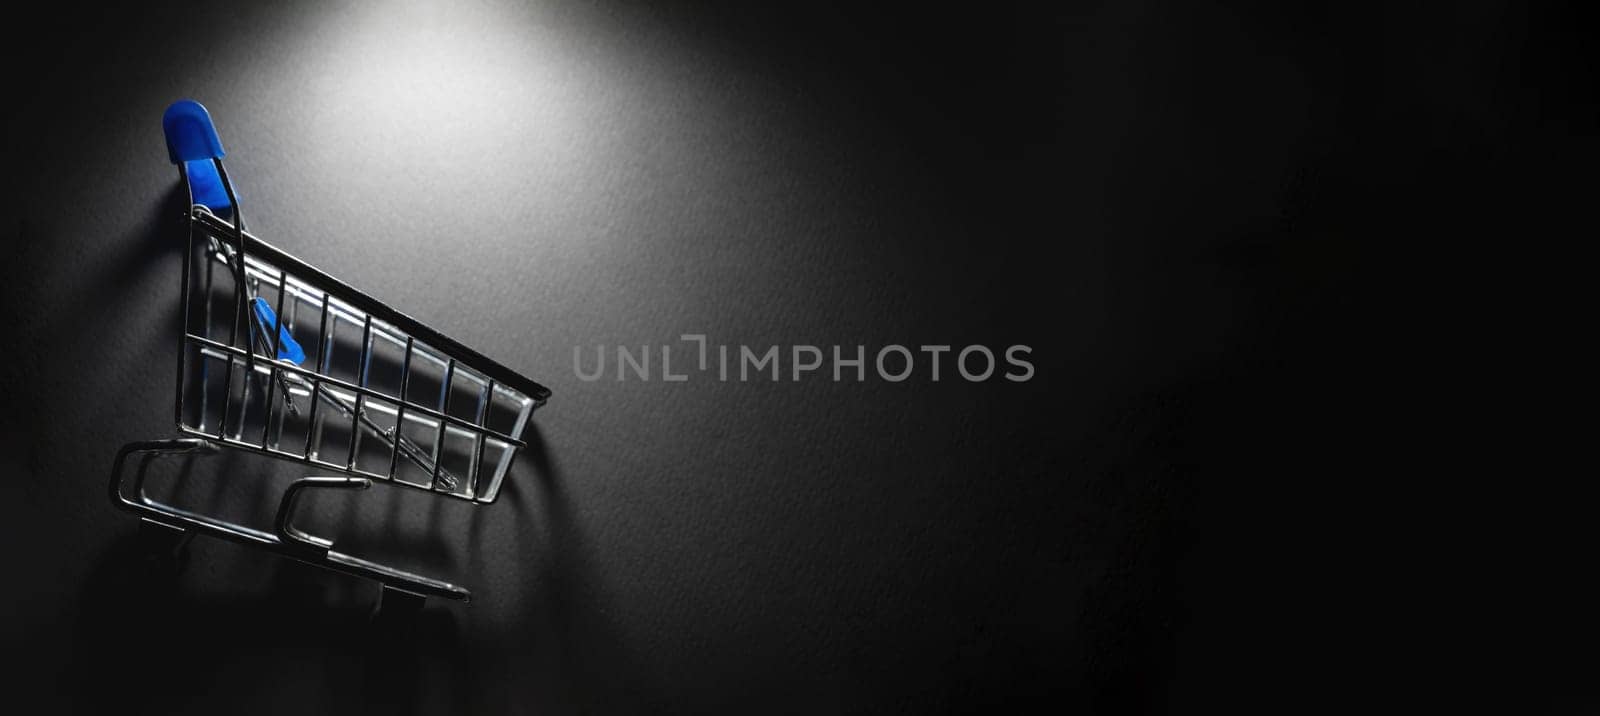 Supermarket cart with spotlight on it on a dark background